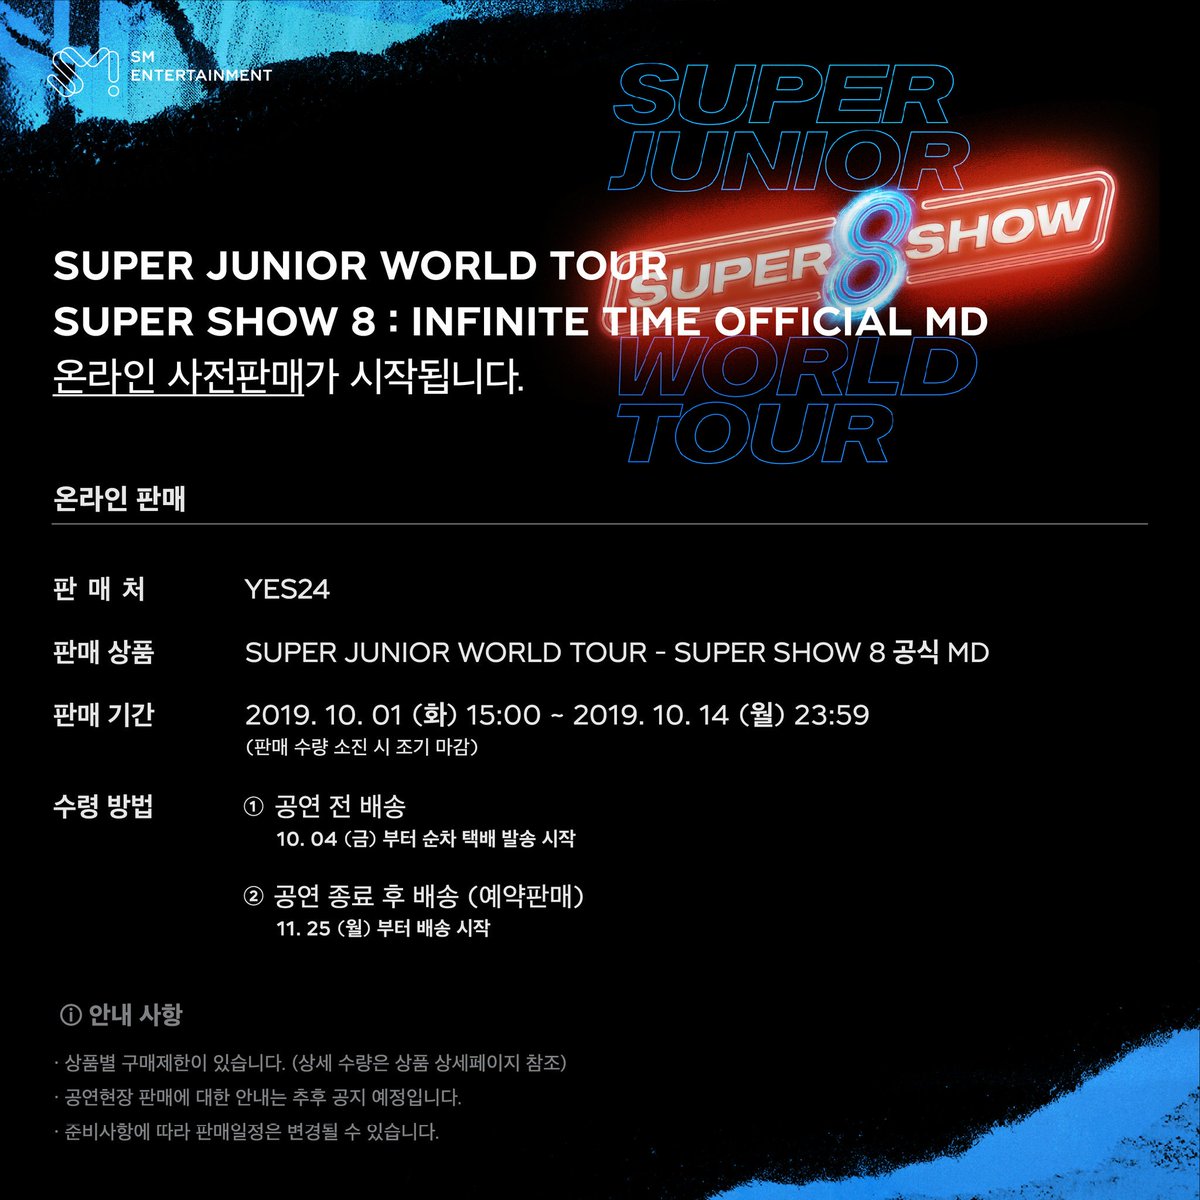 ‘#SUPERJUNIOR WORLD TOUR - #SUPERSHOW8 : #INFINITE_TIME'
OFFICIAL MD 온라인 사전판매 안내
📅판매 기간: 2019.10.04(화) 15:00 PM ~ 10.14(월) 23:59 PM (판매수량 소진 시 조기 마감)
📍판매처: yes24.com/eWorld/EventWo…

#슈퍼주니어